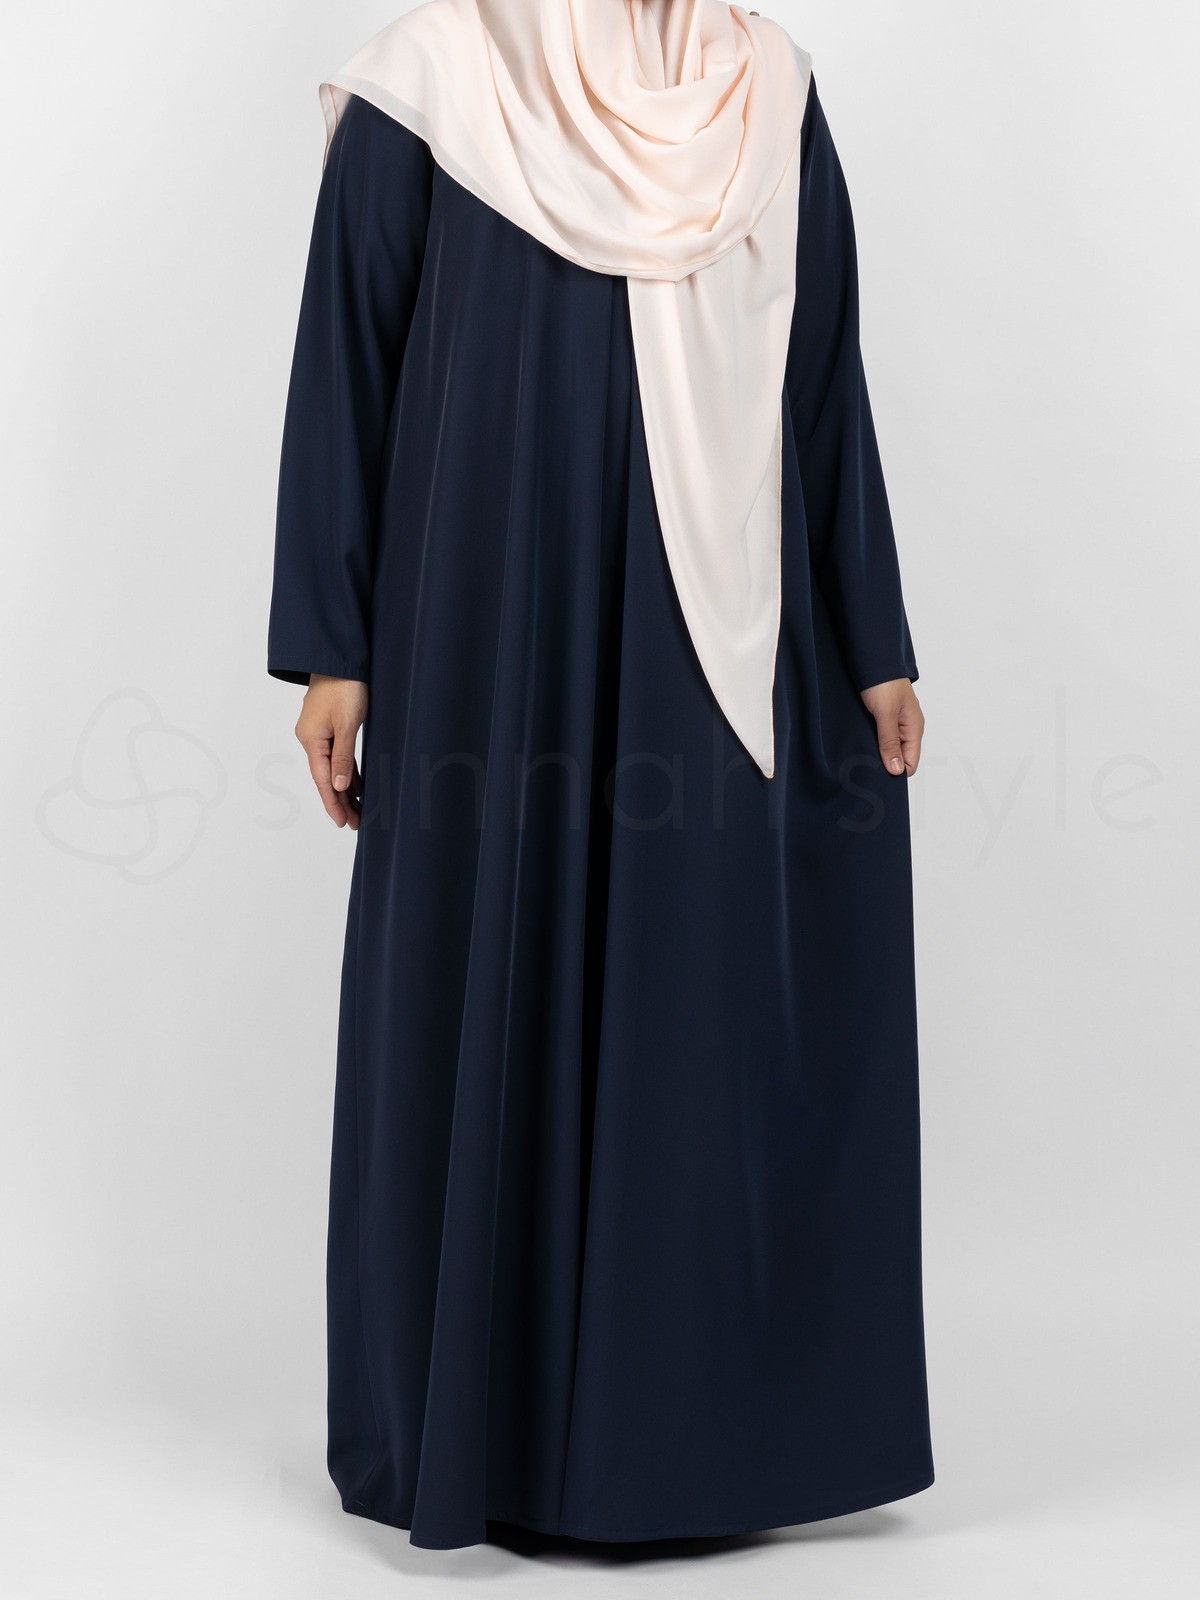 Sunnah Style - Flare Abaya (Navy Blue)